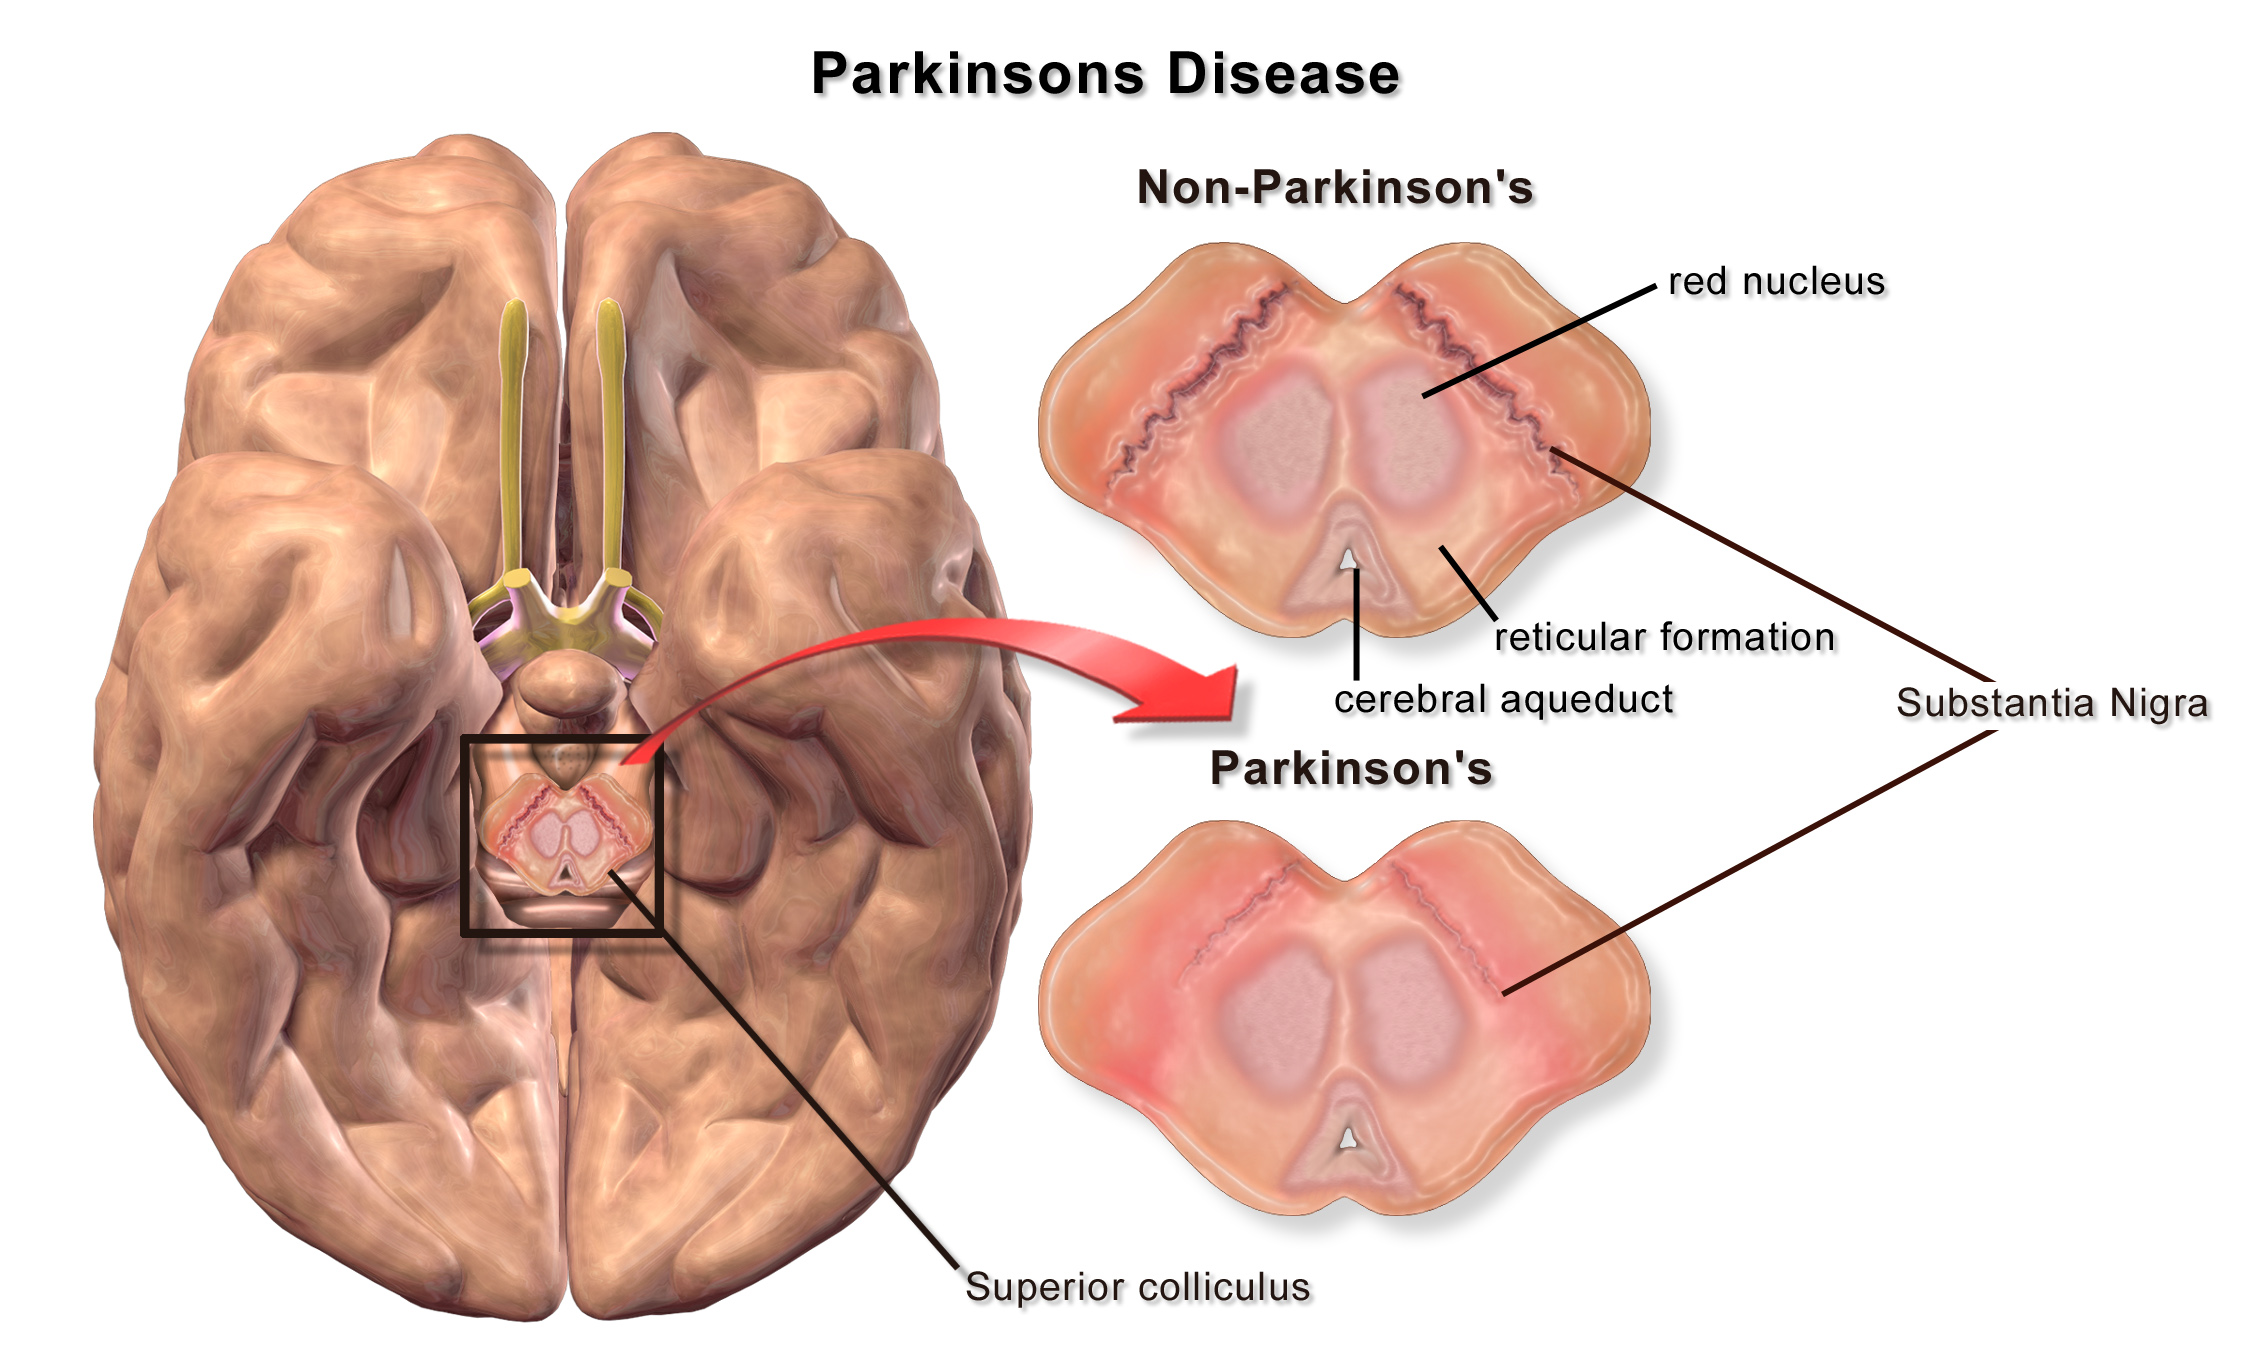 VA Disability for Parkinson’s Disease